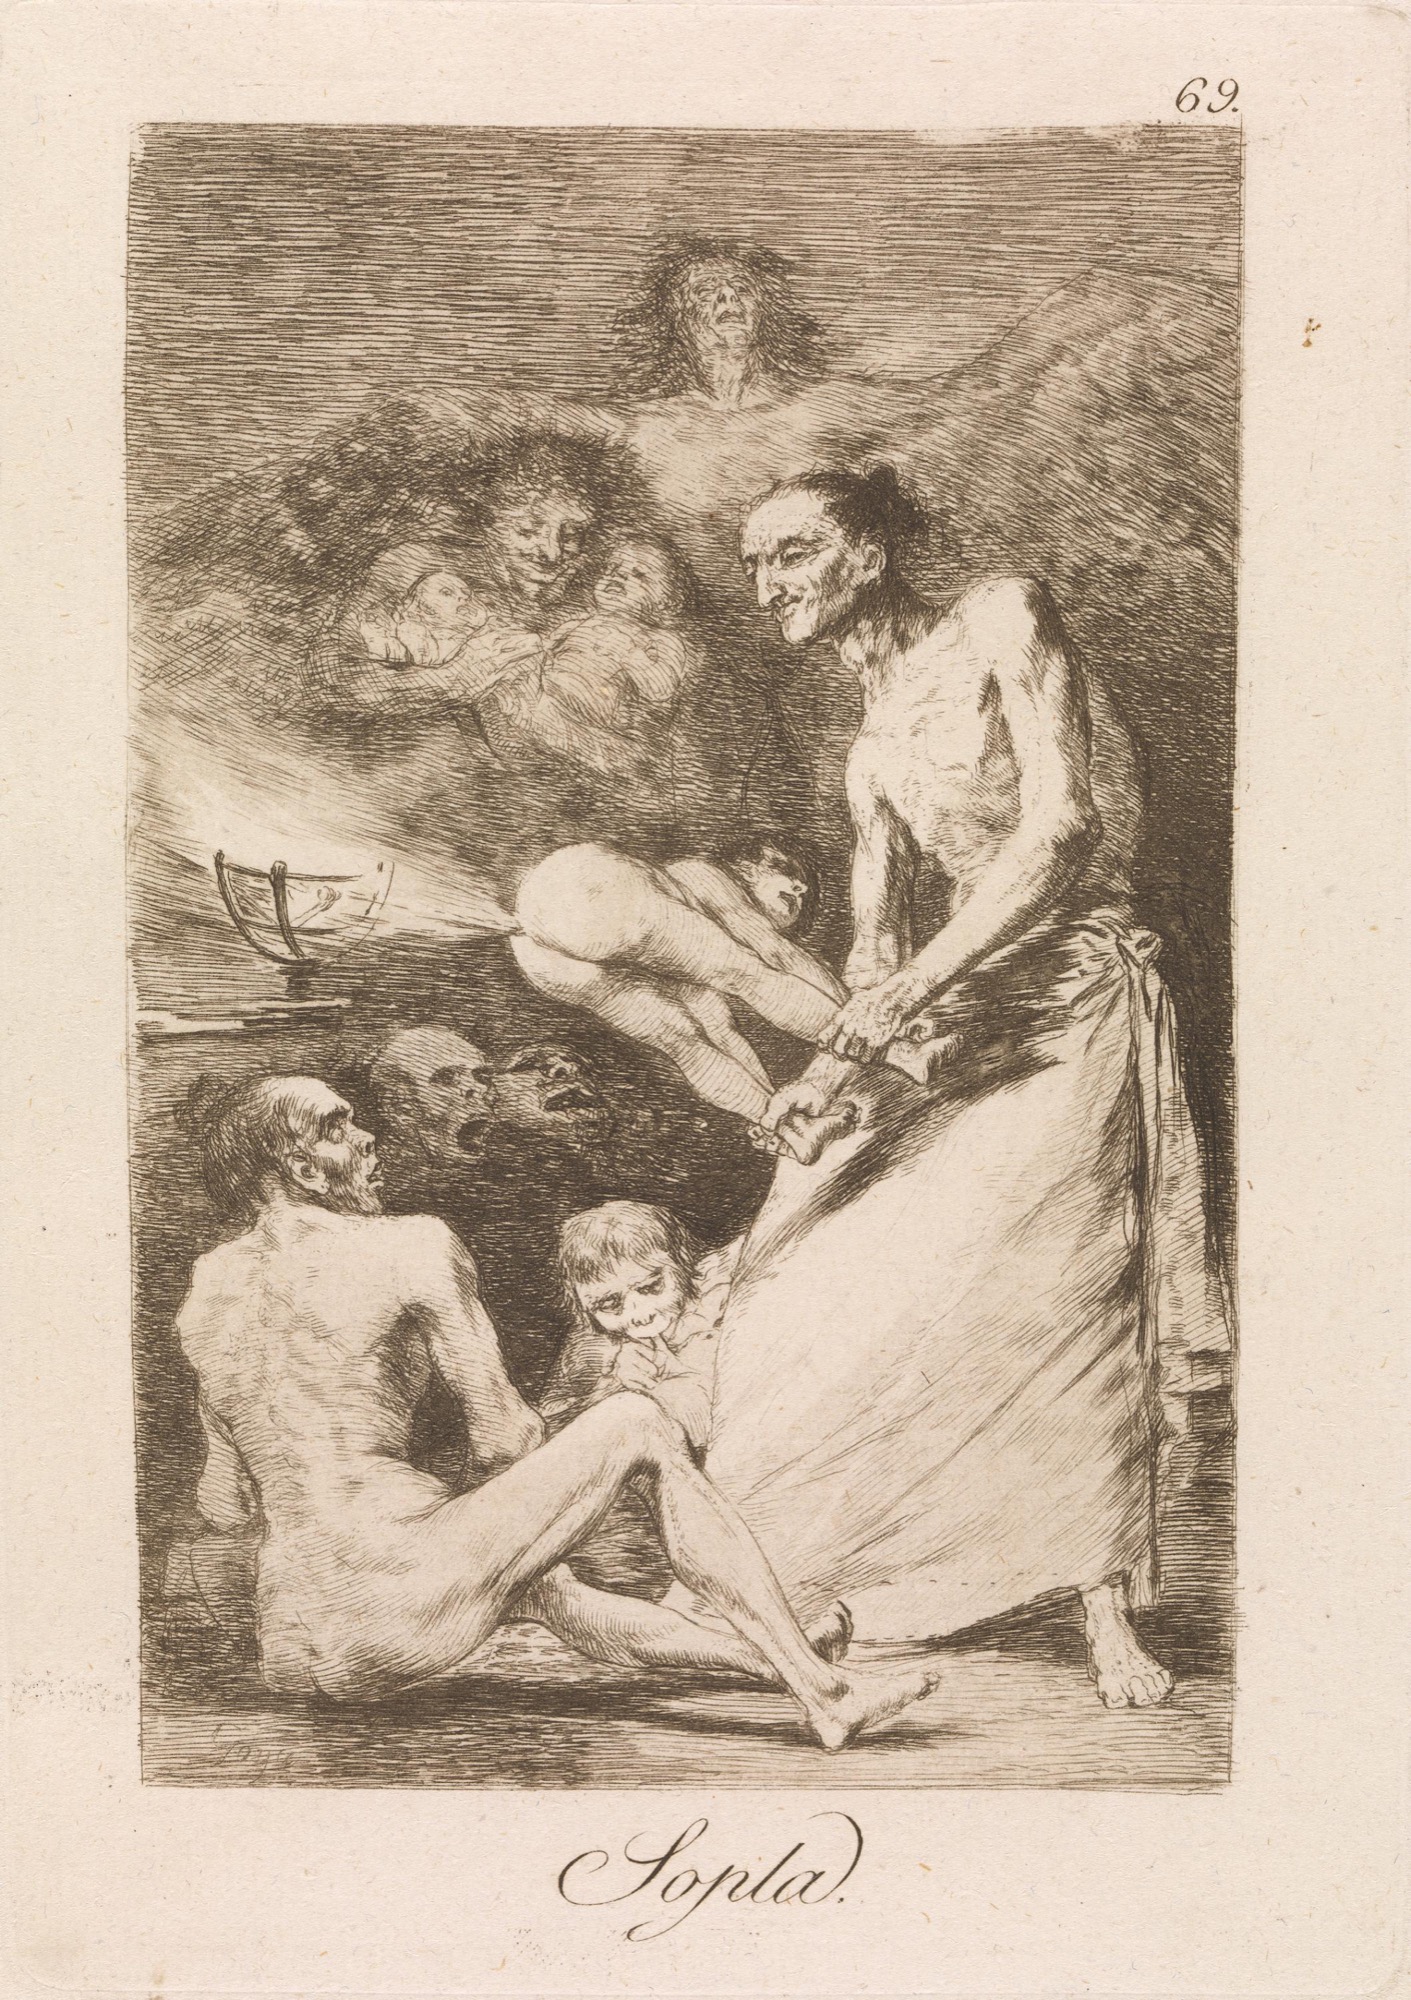 Francisco Goya y Lucientes, <em>Sopla (Blow)</em>, plate 69 from <em>Los Caprichos (The Caprices)</em> series (1797–98), published 1799.